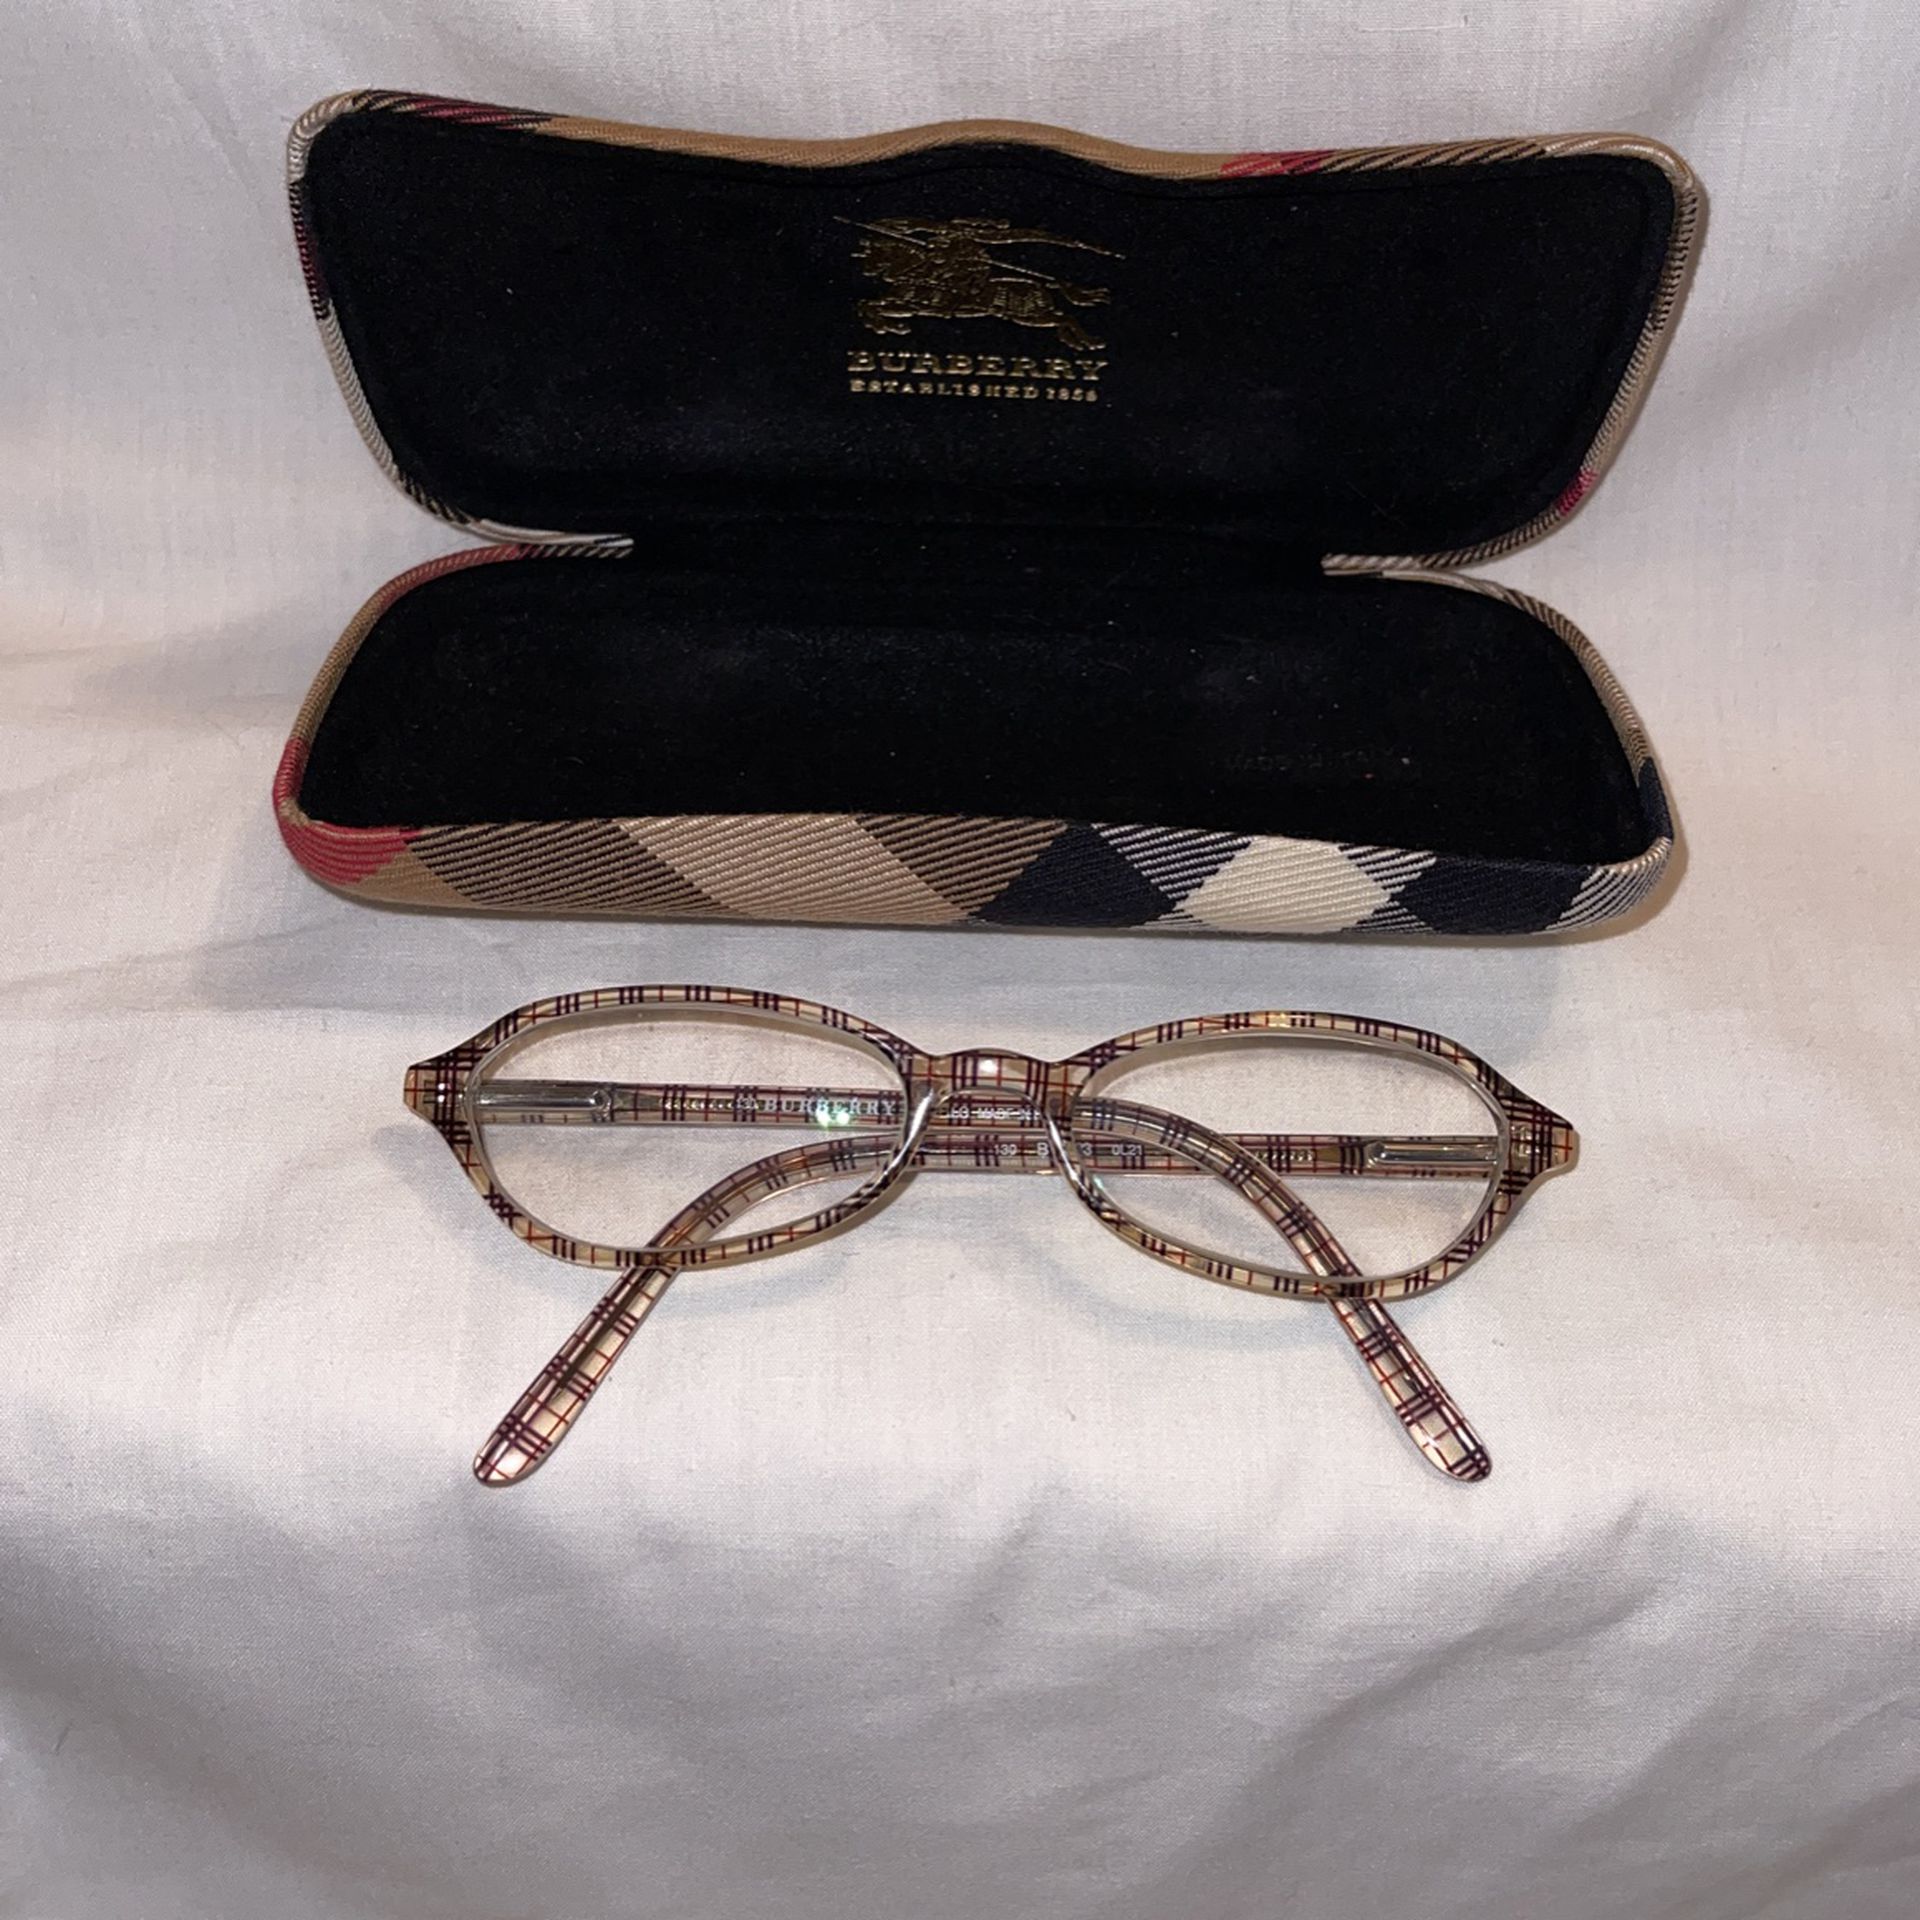 Woman’s Burberry Prescription eyeglass frames w/case, Asking 50% Off What I Paid